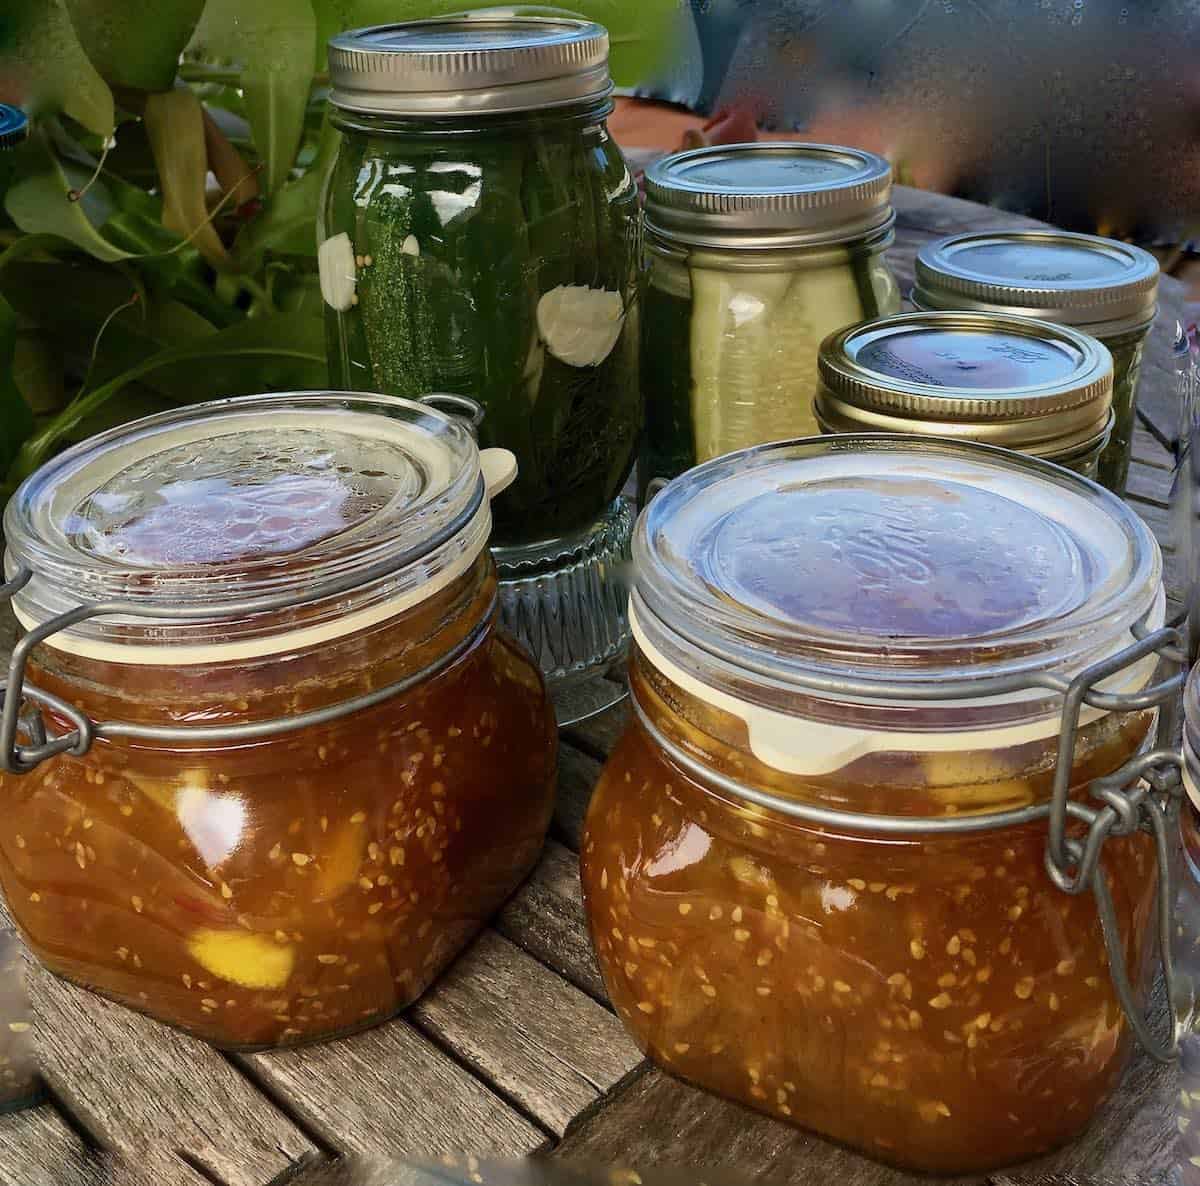 Pickles and jam jars.